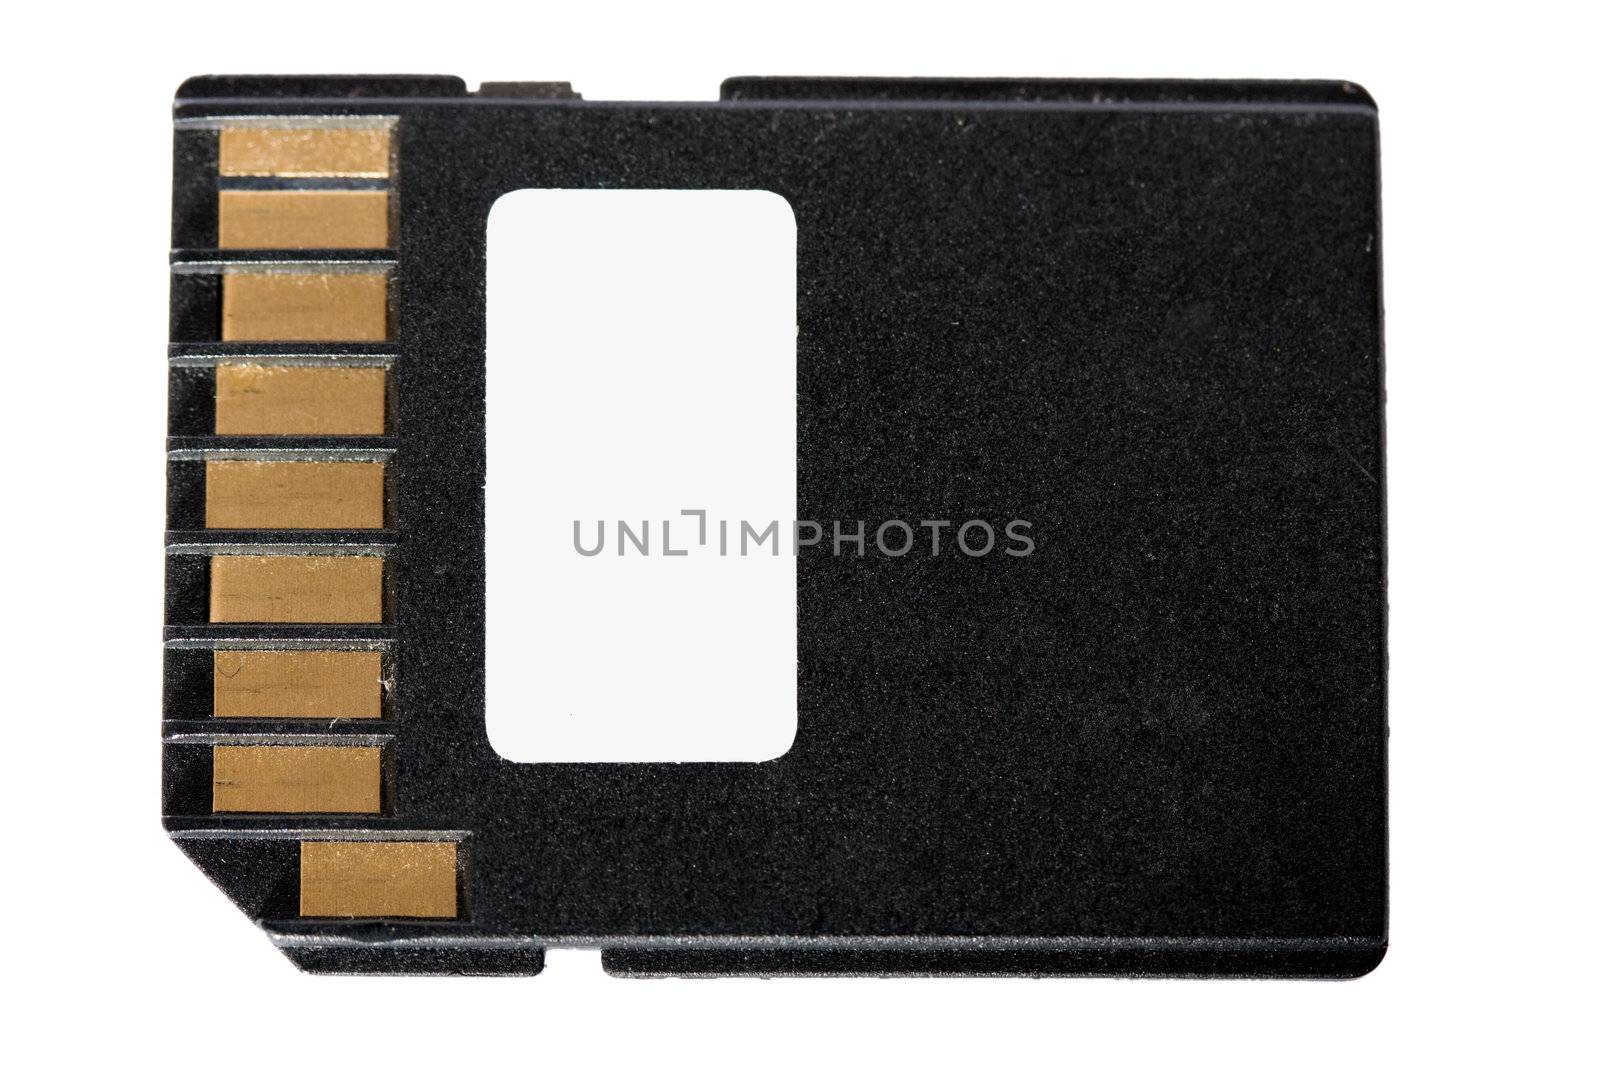 SD memory card by Irina1977